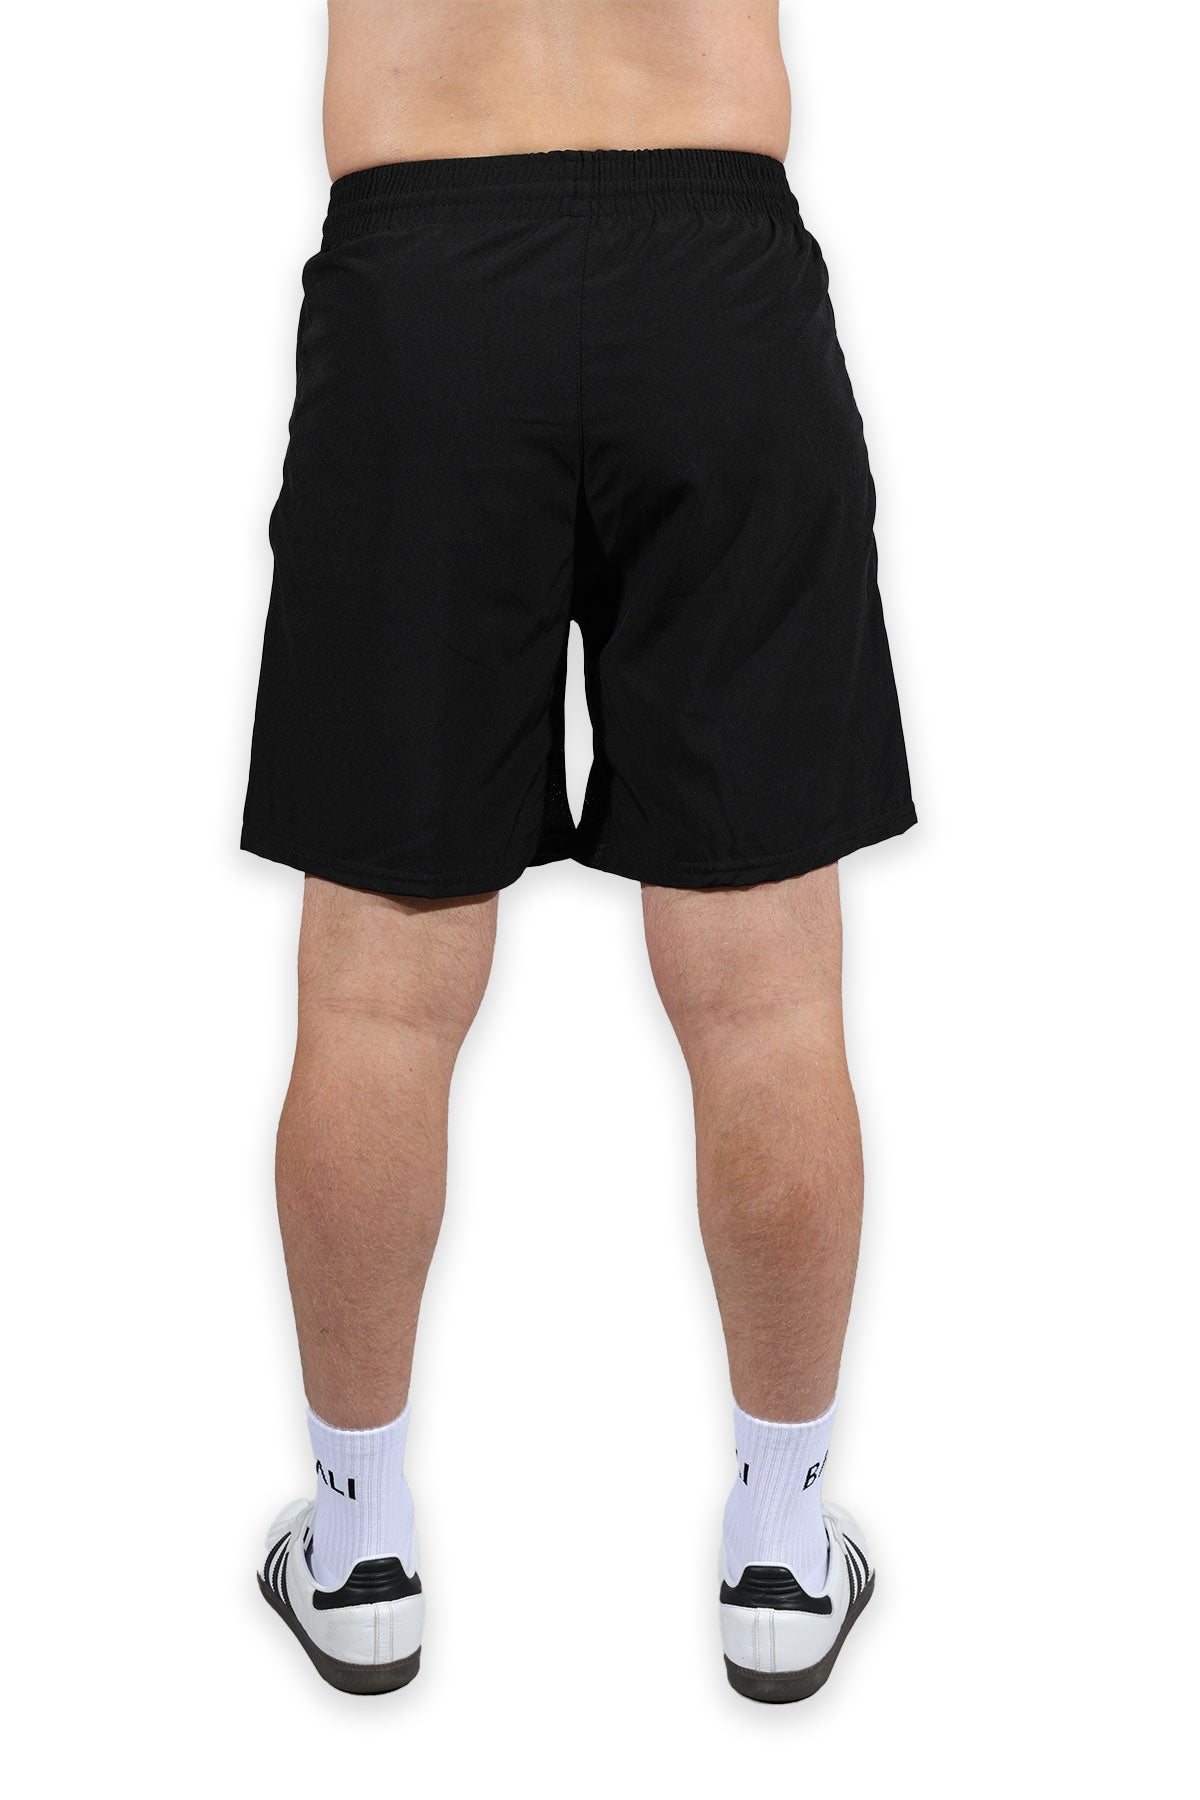 MicroLite Shorts